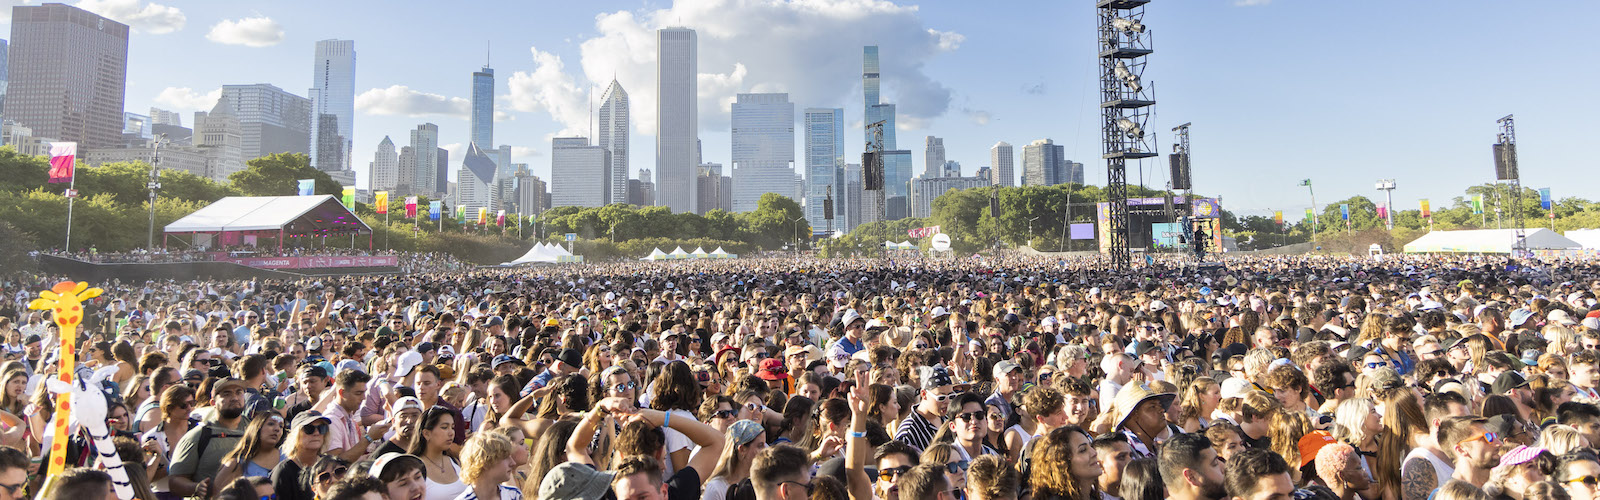 Lollapalooza festival crowd 2022